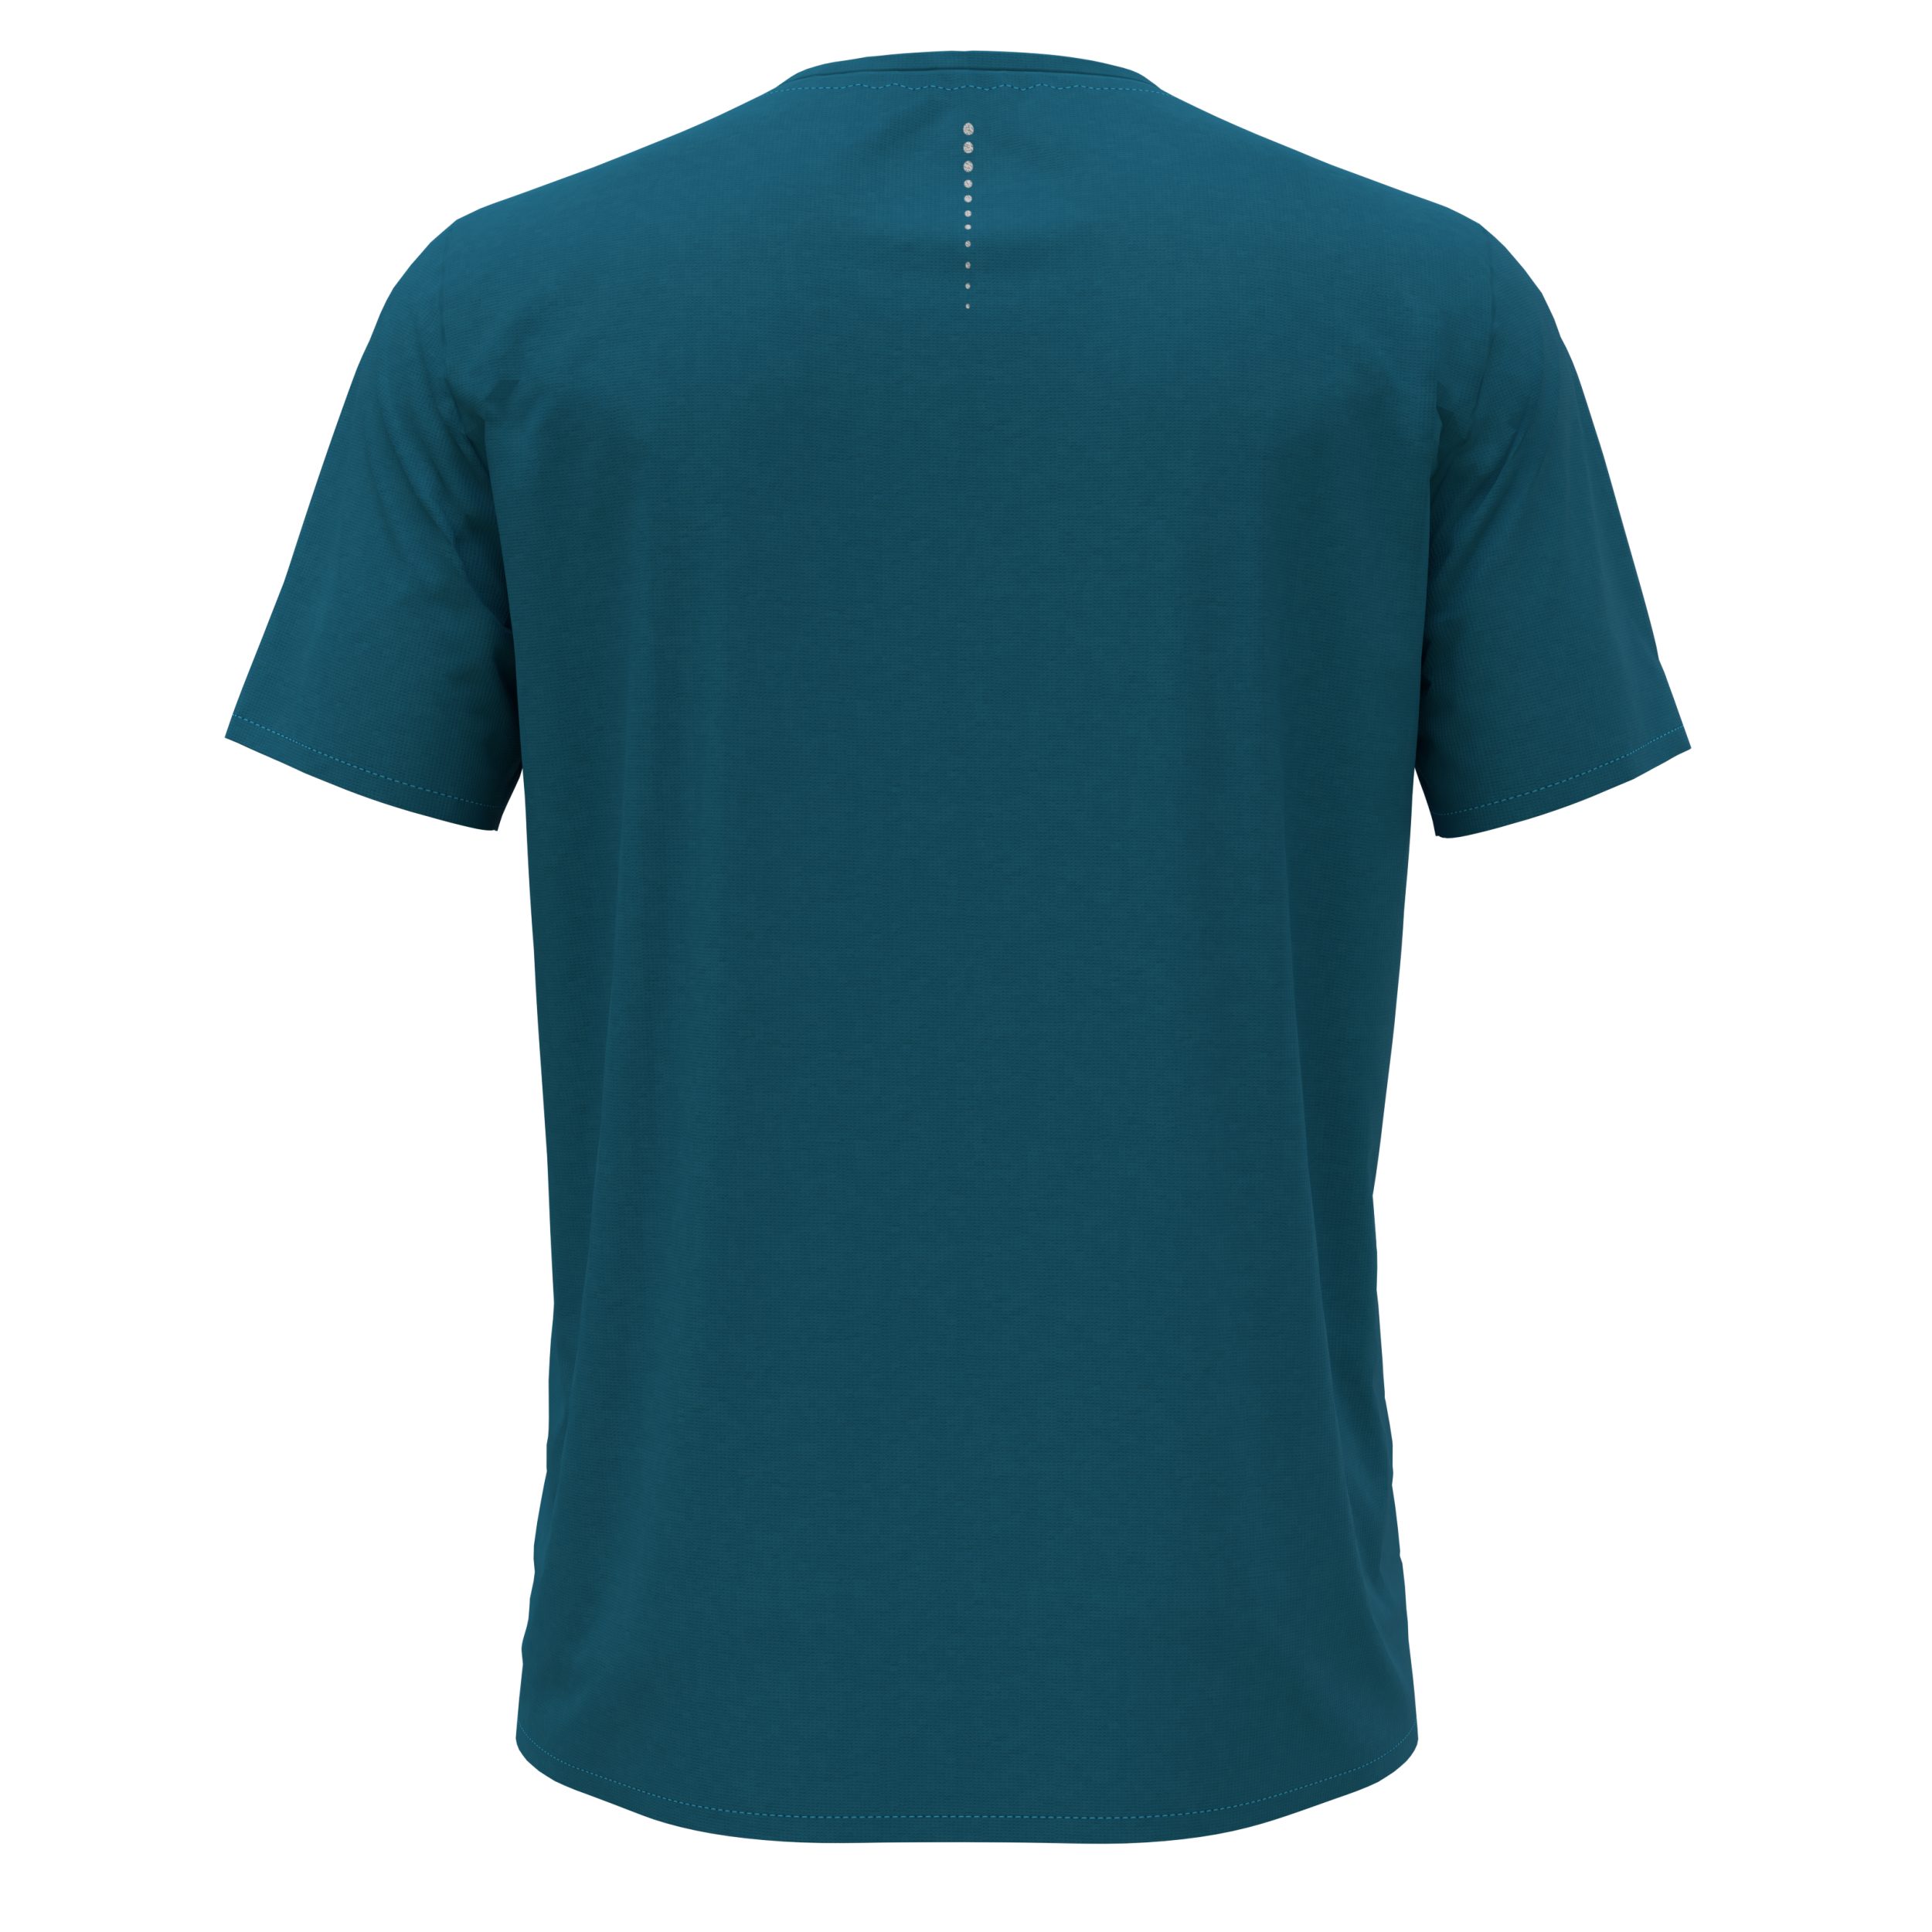 21024 neck crew s/s ZEROWEIG blue Odlo Funktionsshirt saxony T-shirt